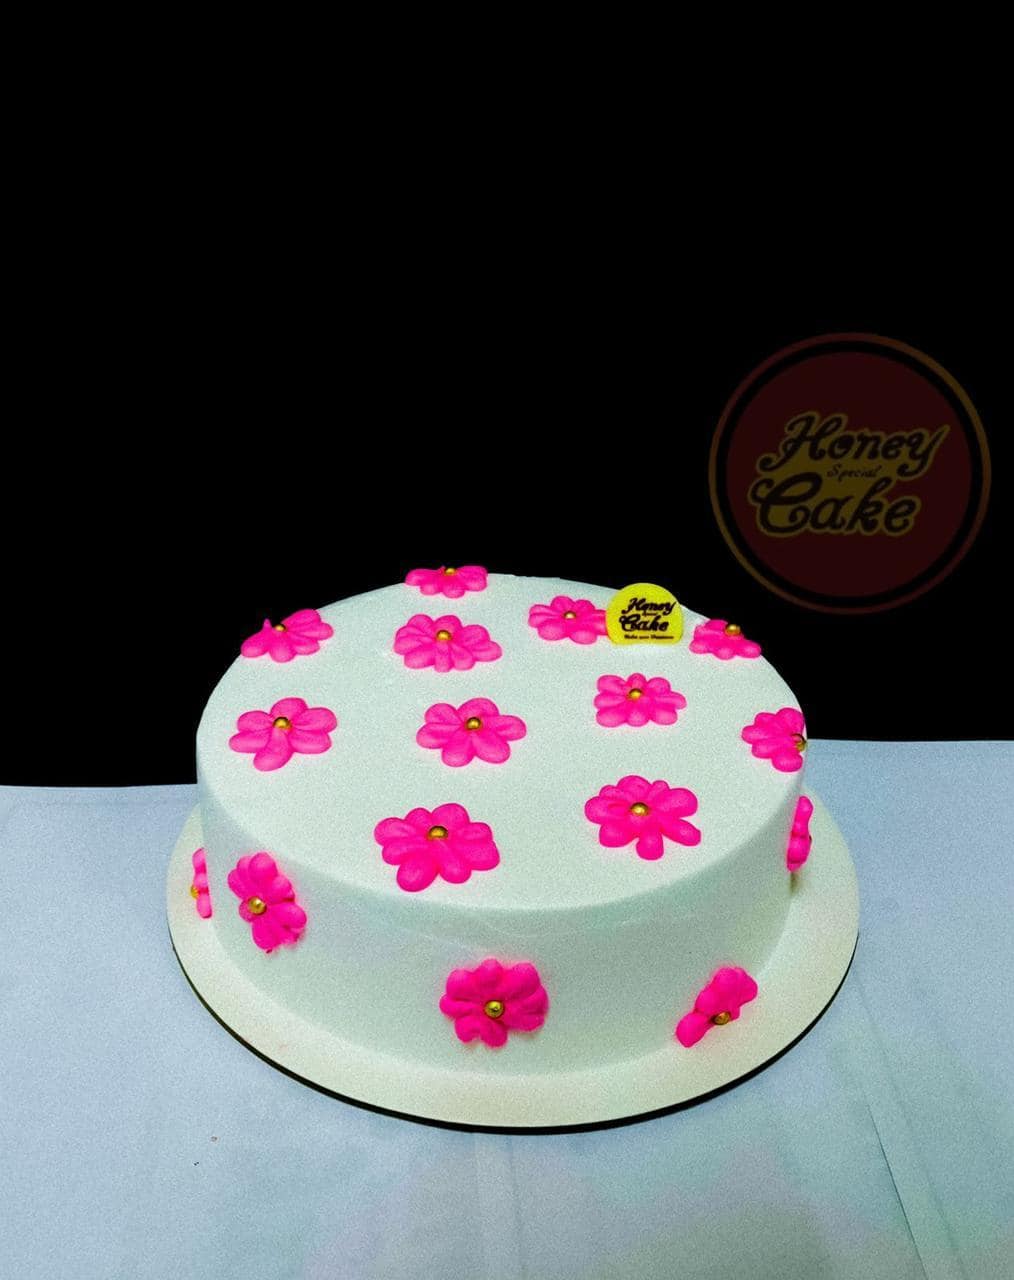 Honey special cake Qatar | Updates, Photos, Videos